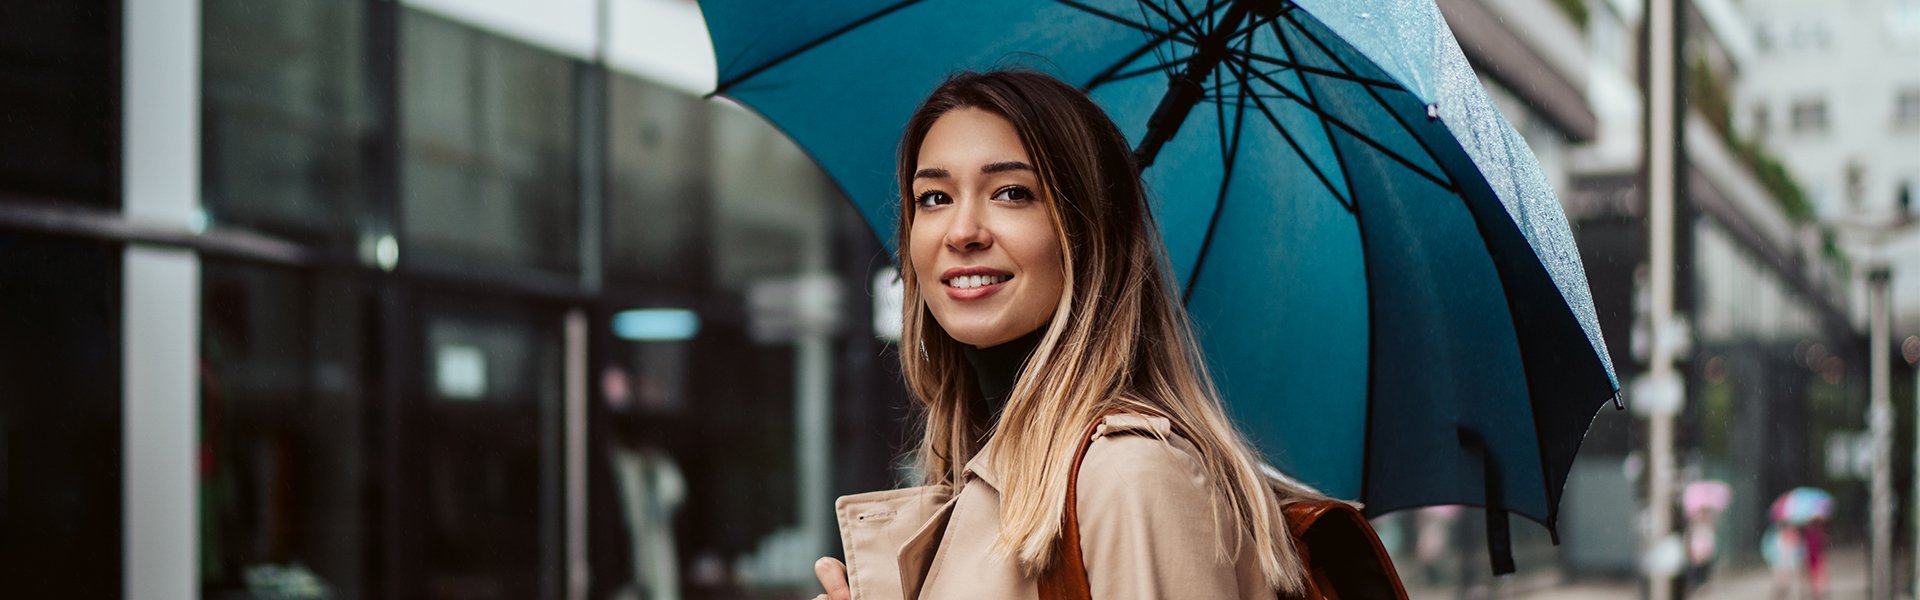 Woman holding umbrella in rainy weather